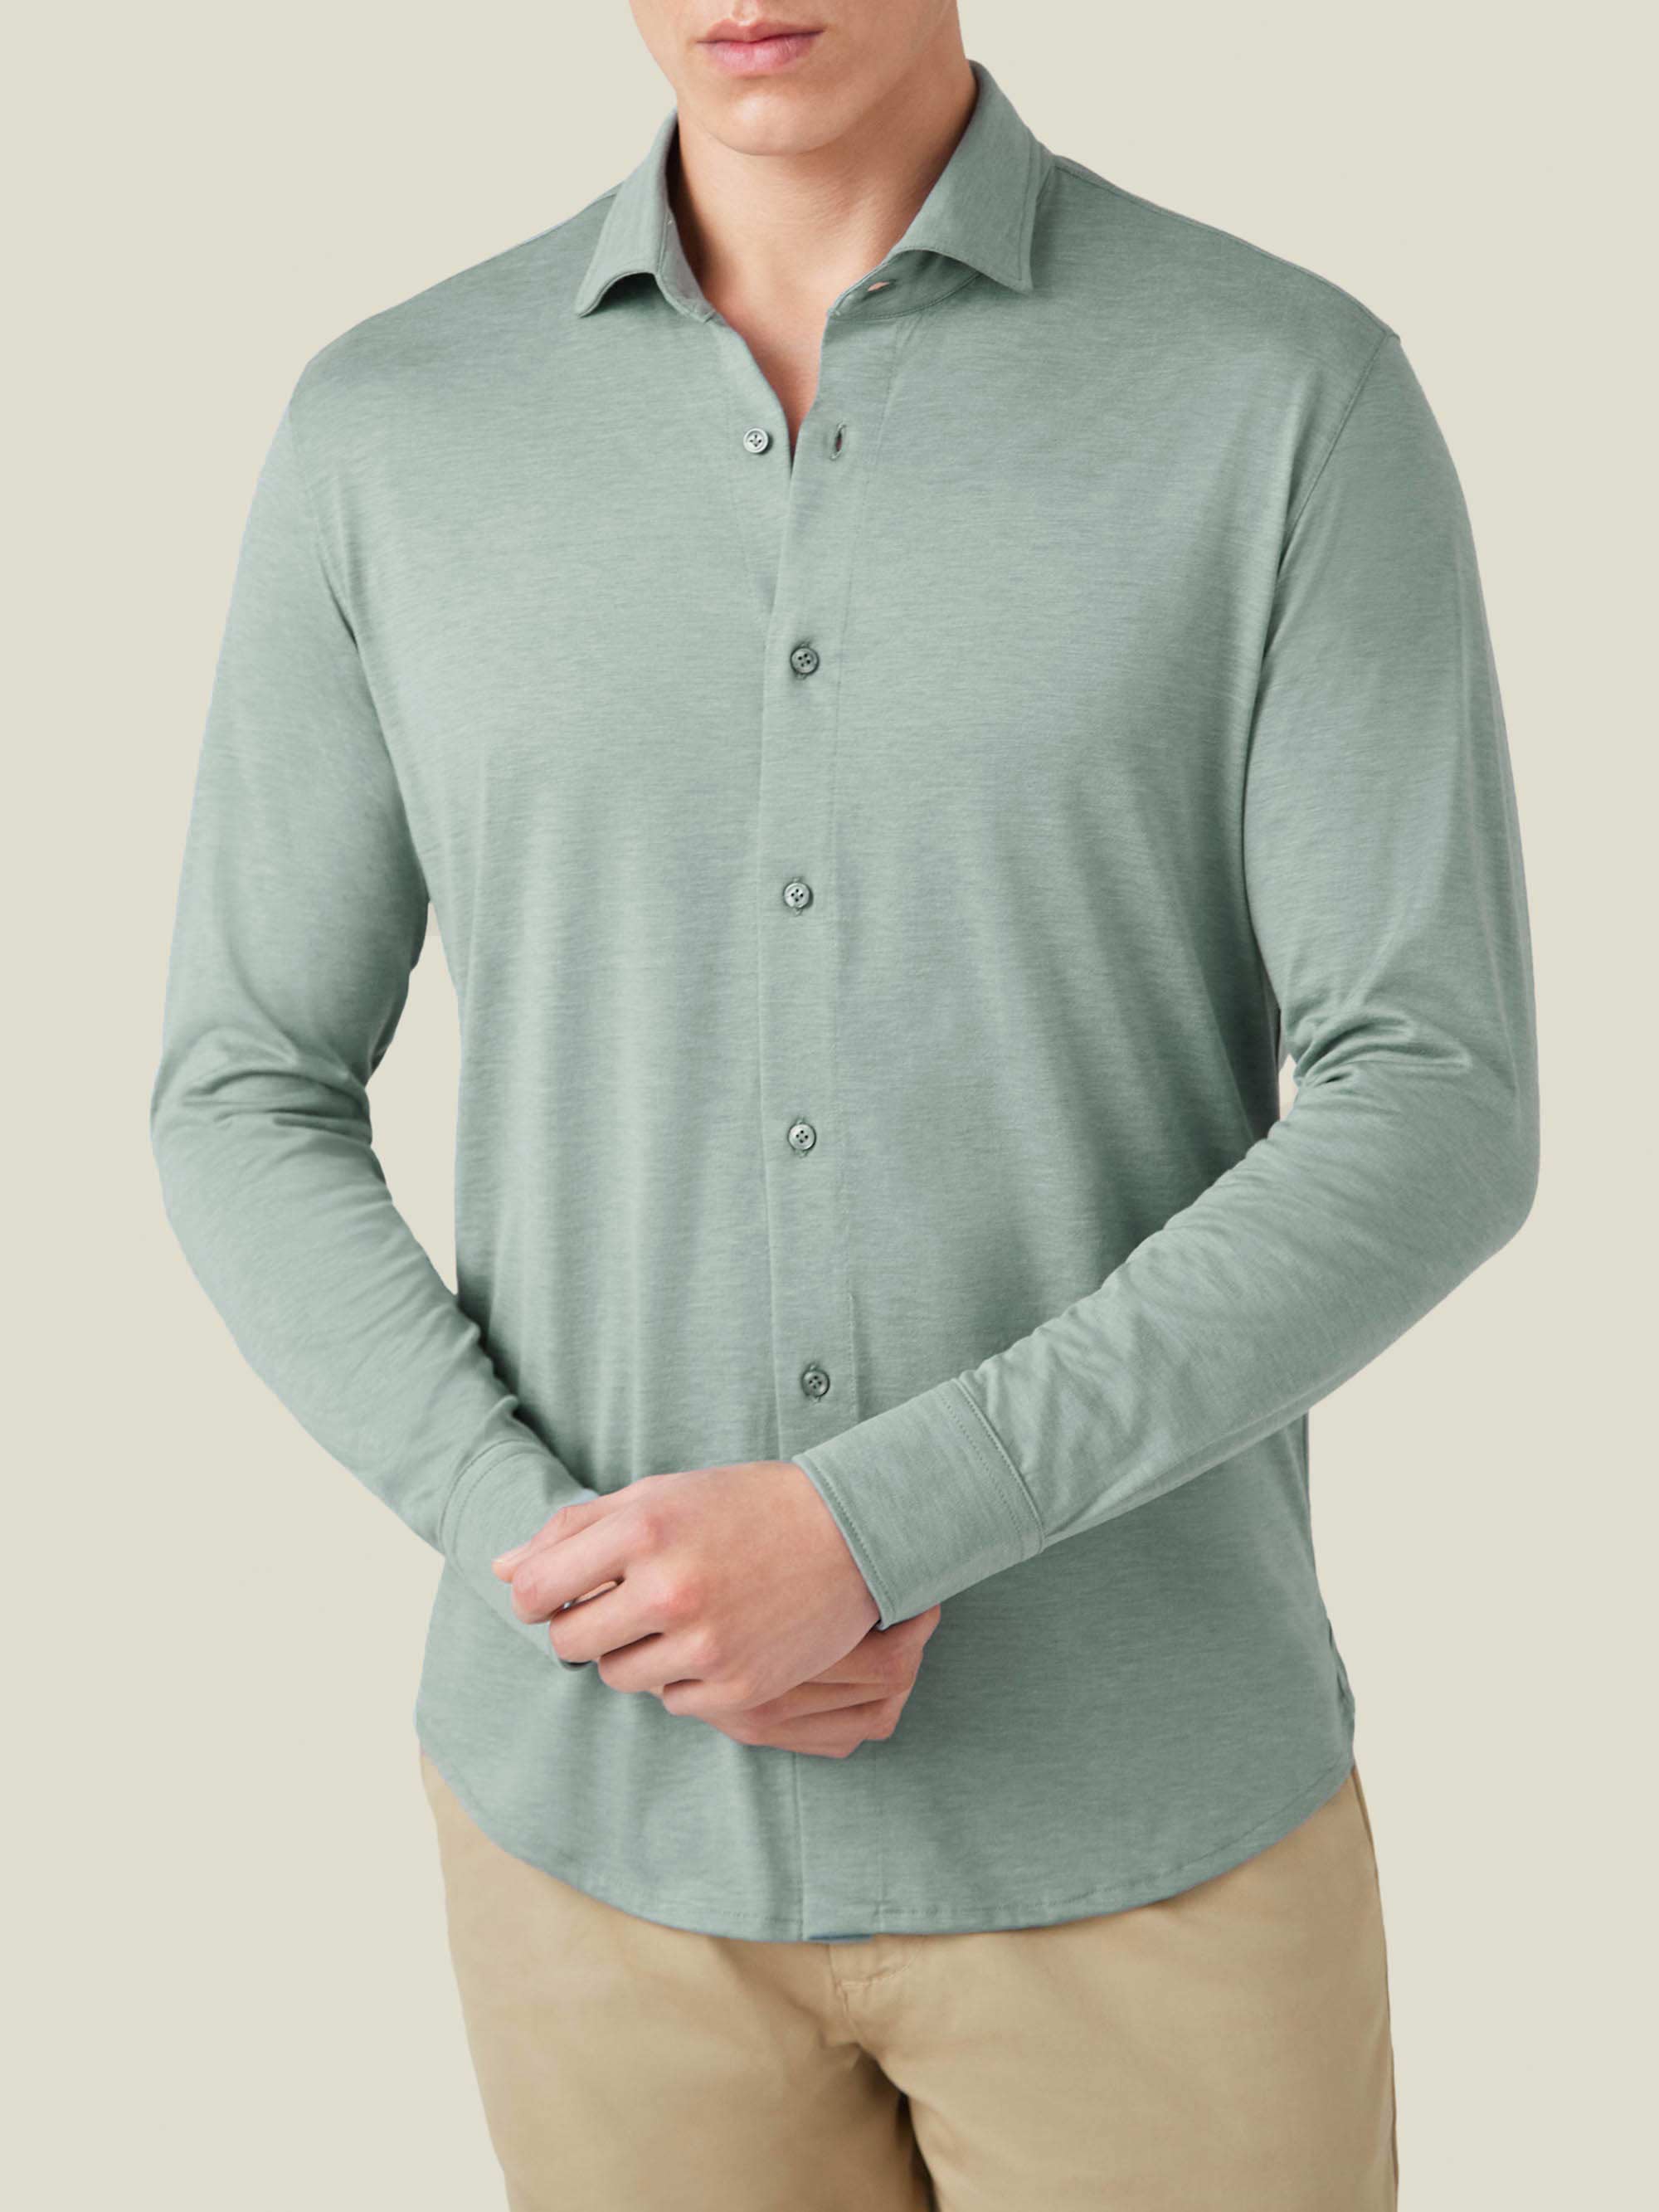 Luca Faloni's Men Marine Green Silk-Cotton Shirt - Classic Cutaway Collar - Long sleeved - Made in Italy product